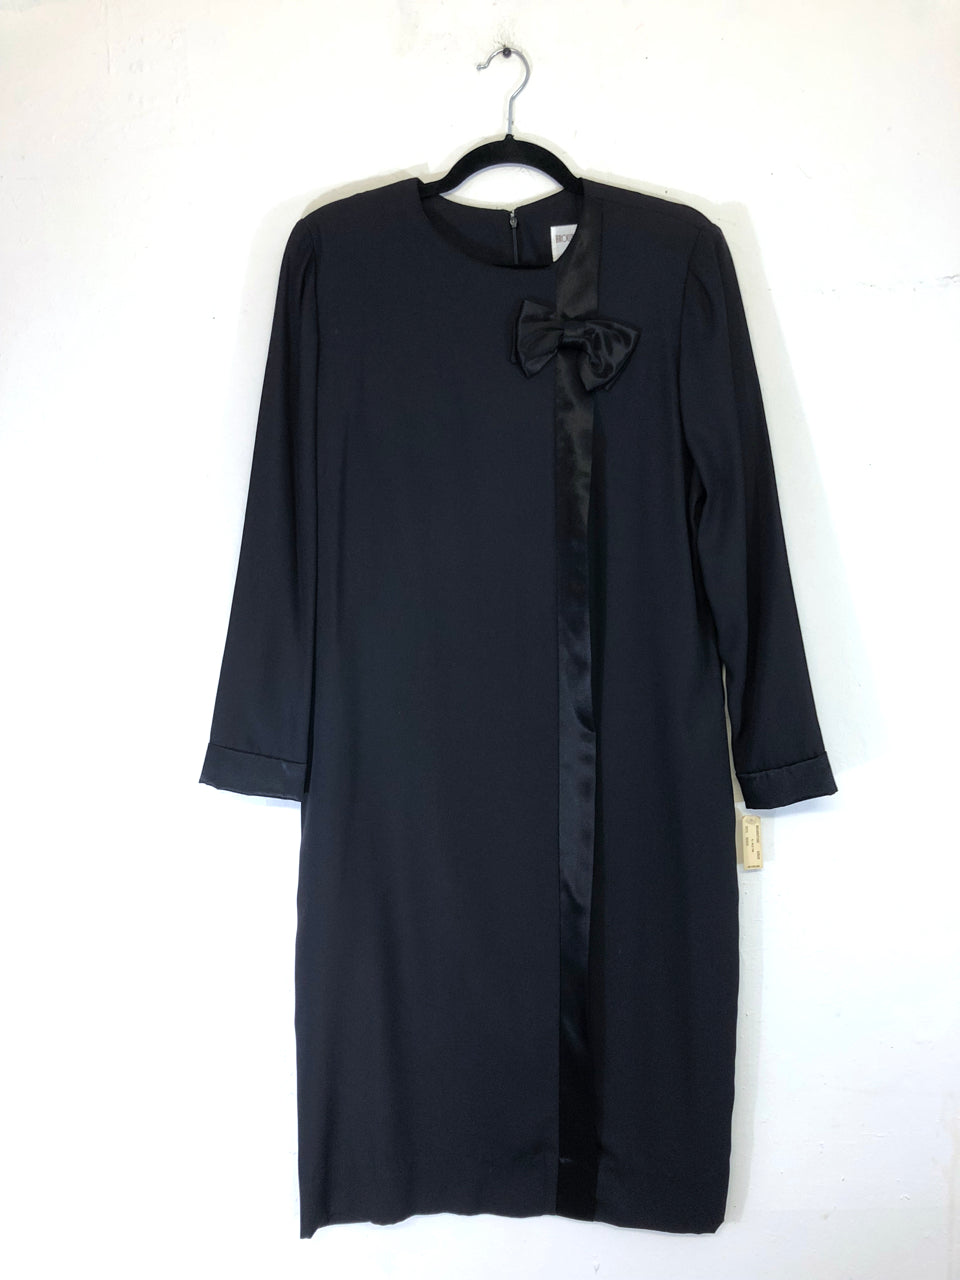 Brownstone Studio New York Black Bow Dress (NWT)